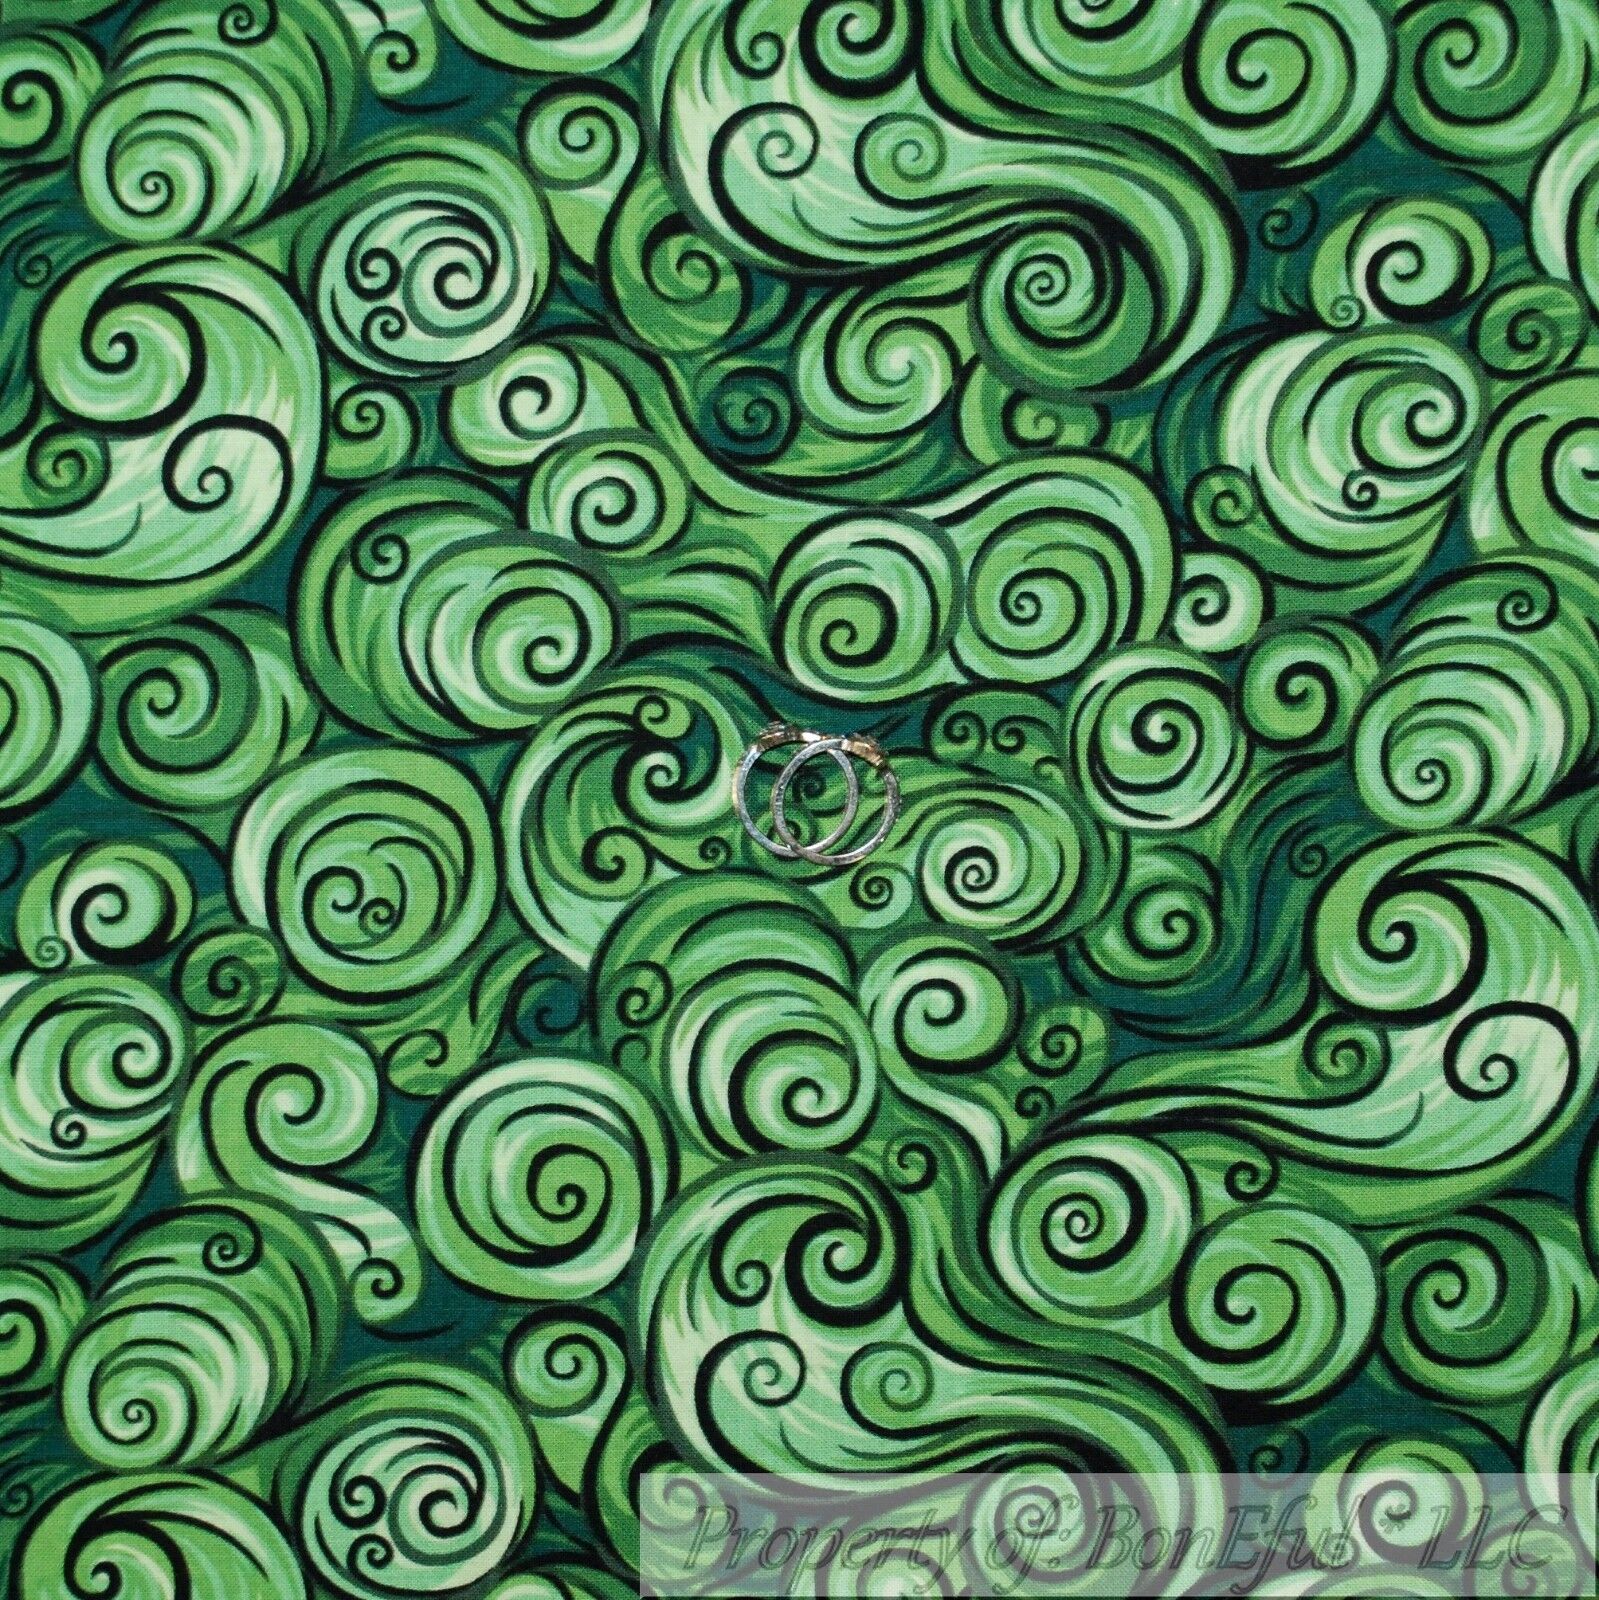 BonEful FABRIC Cotton Quilt Green Black Swirl Scroll St Patricks Day SALE SCRAP